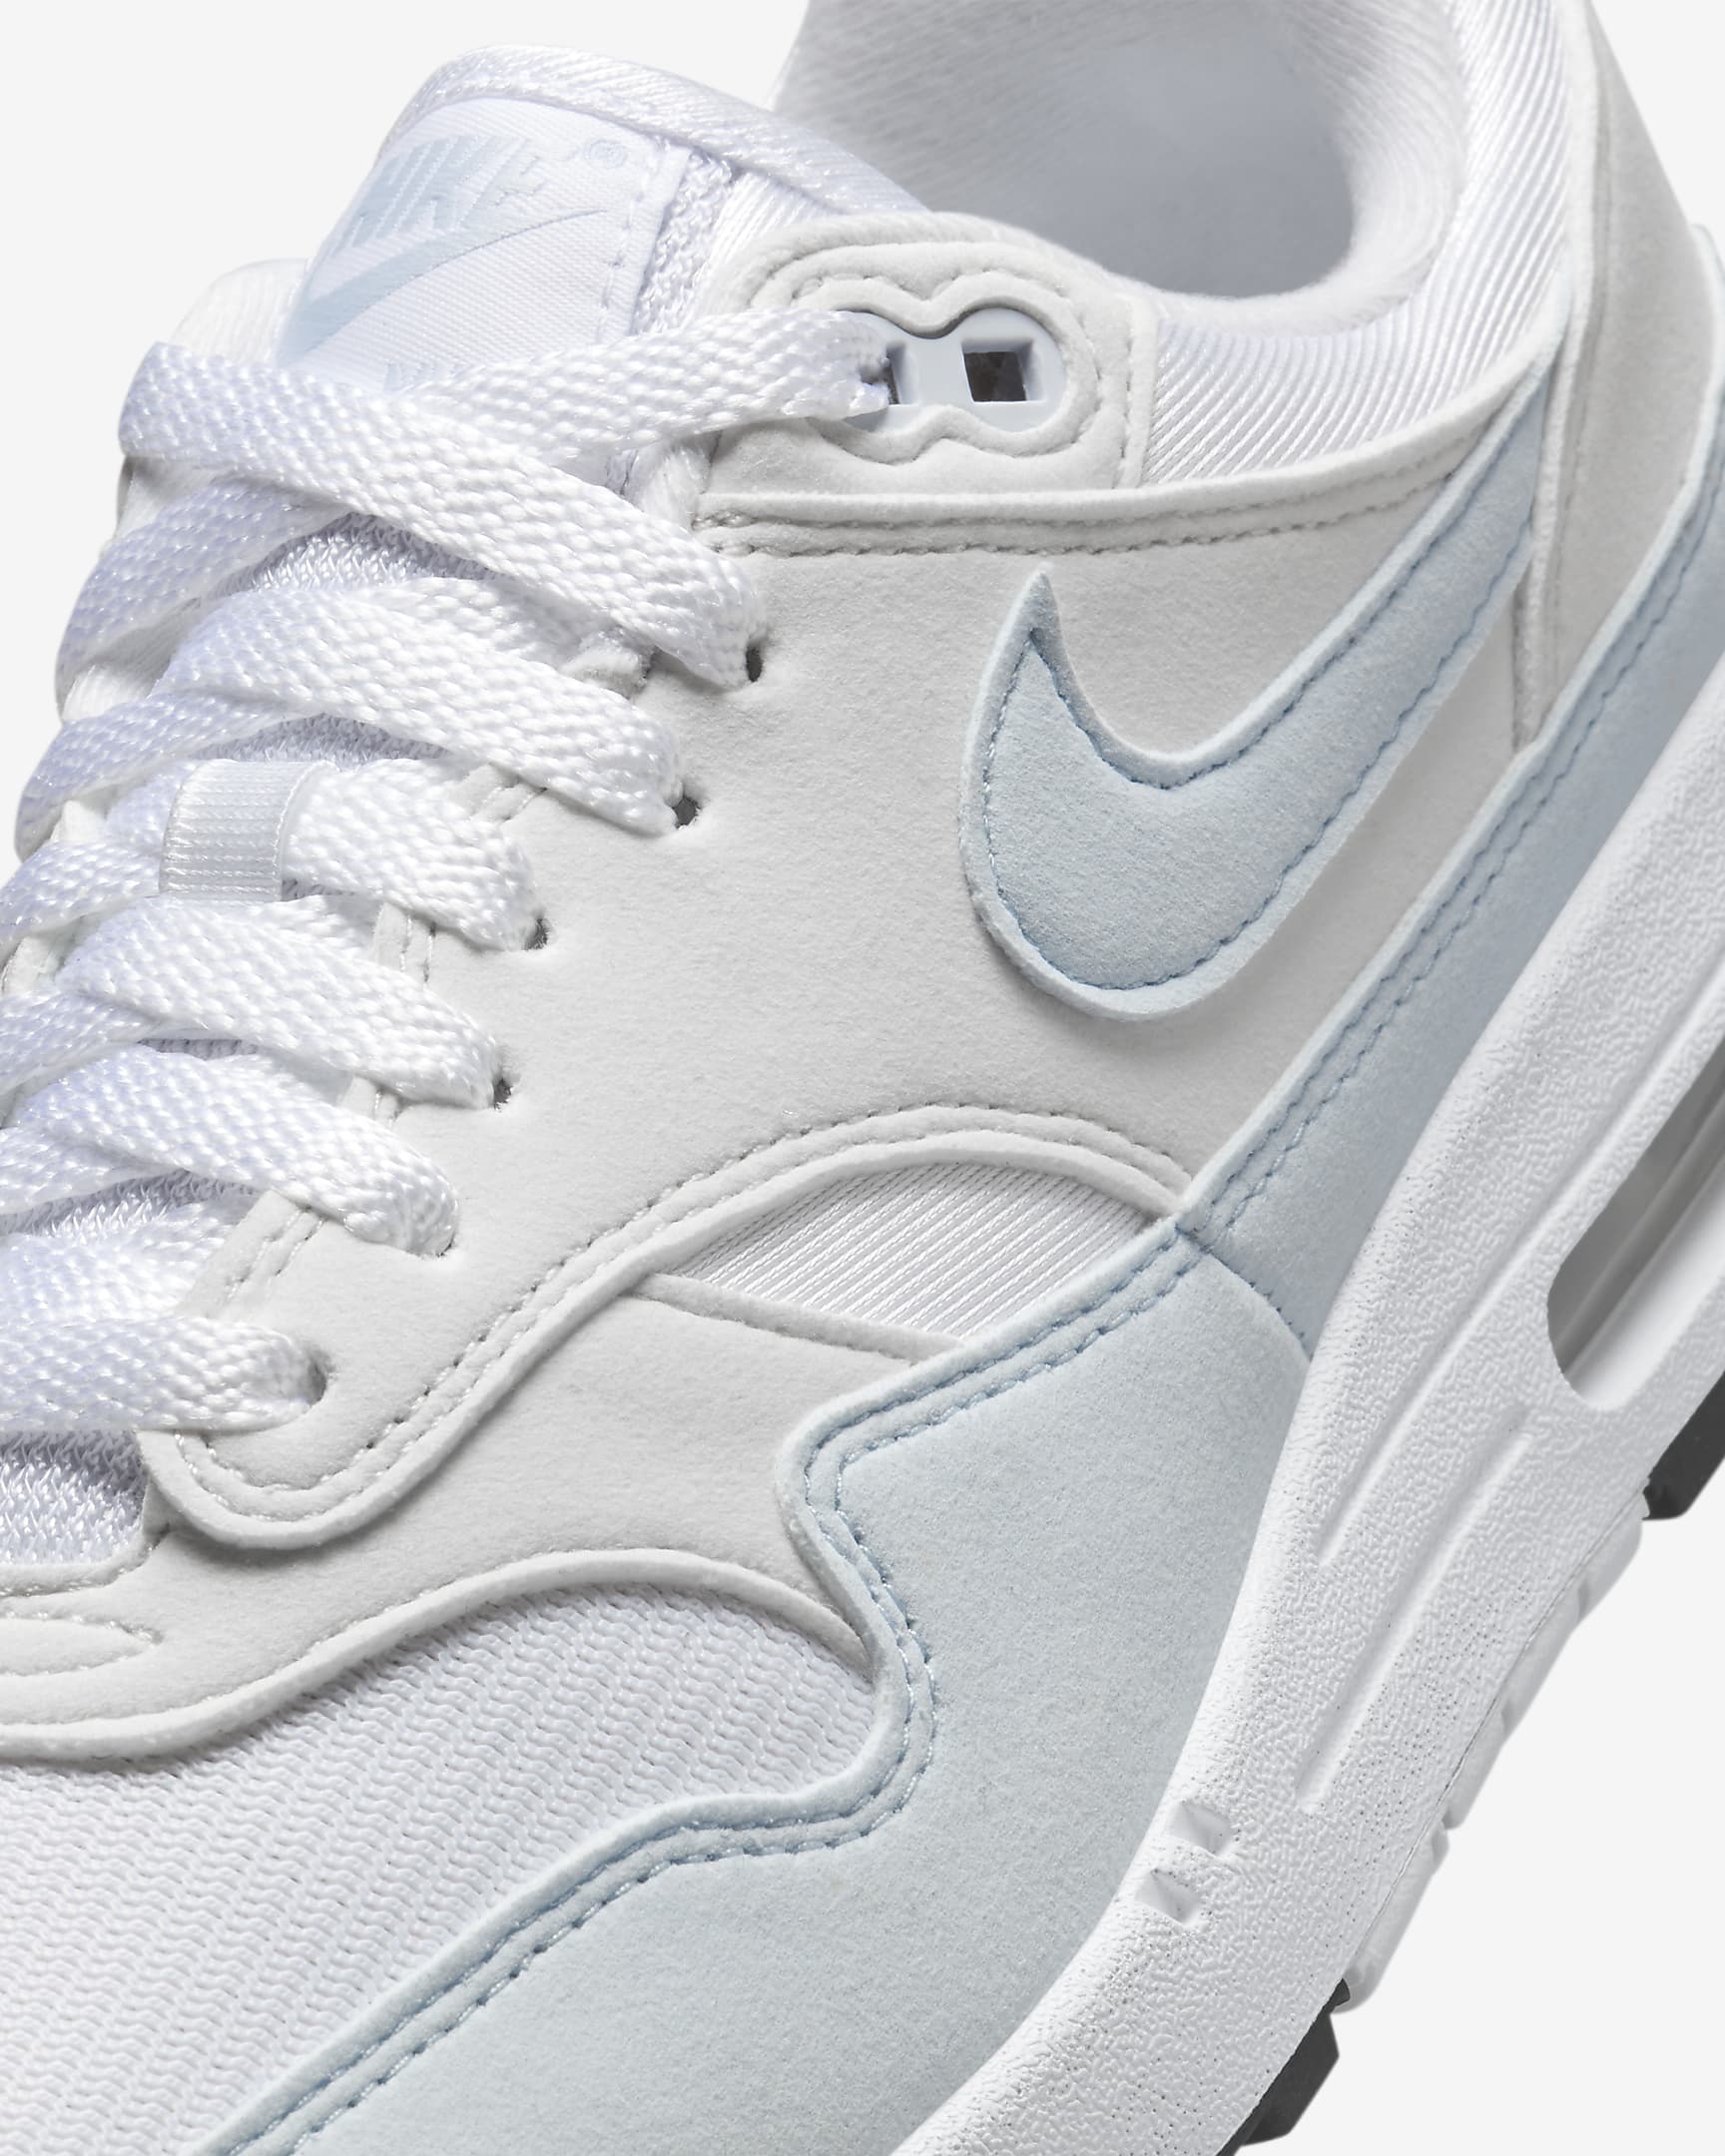 Nike Air Max 1 Women's Shoes - White/Platinum Tint/Black/Football Grey